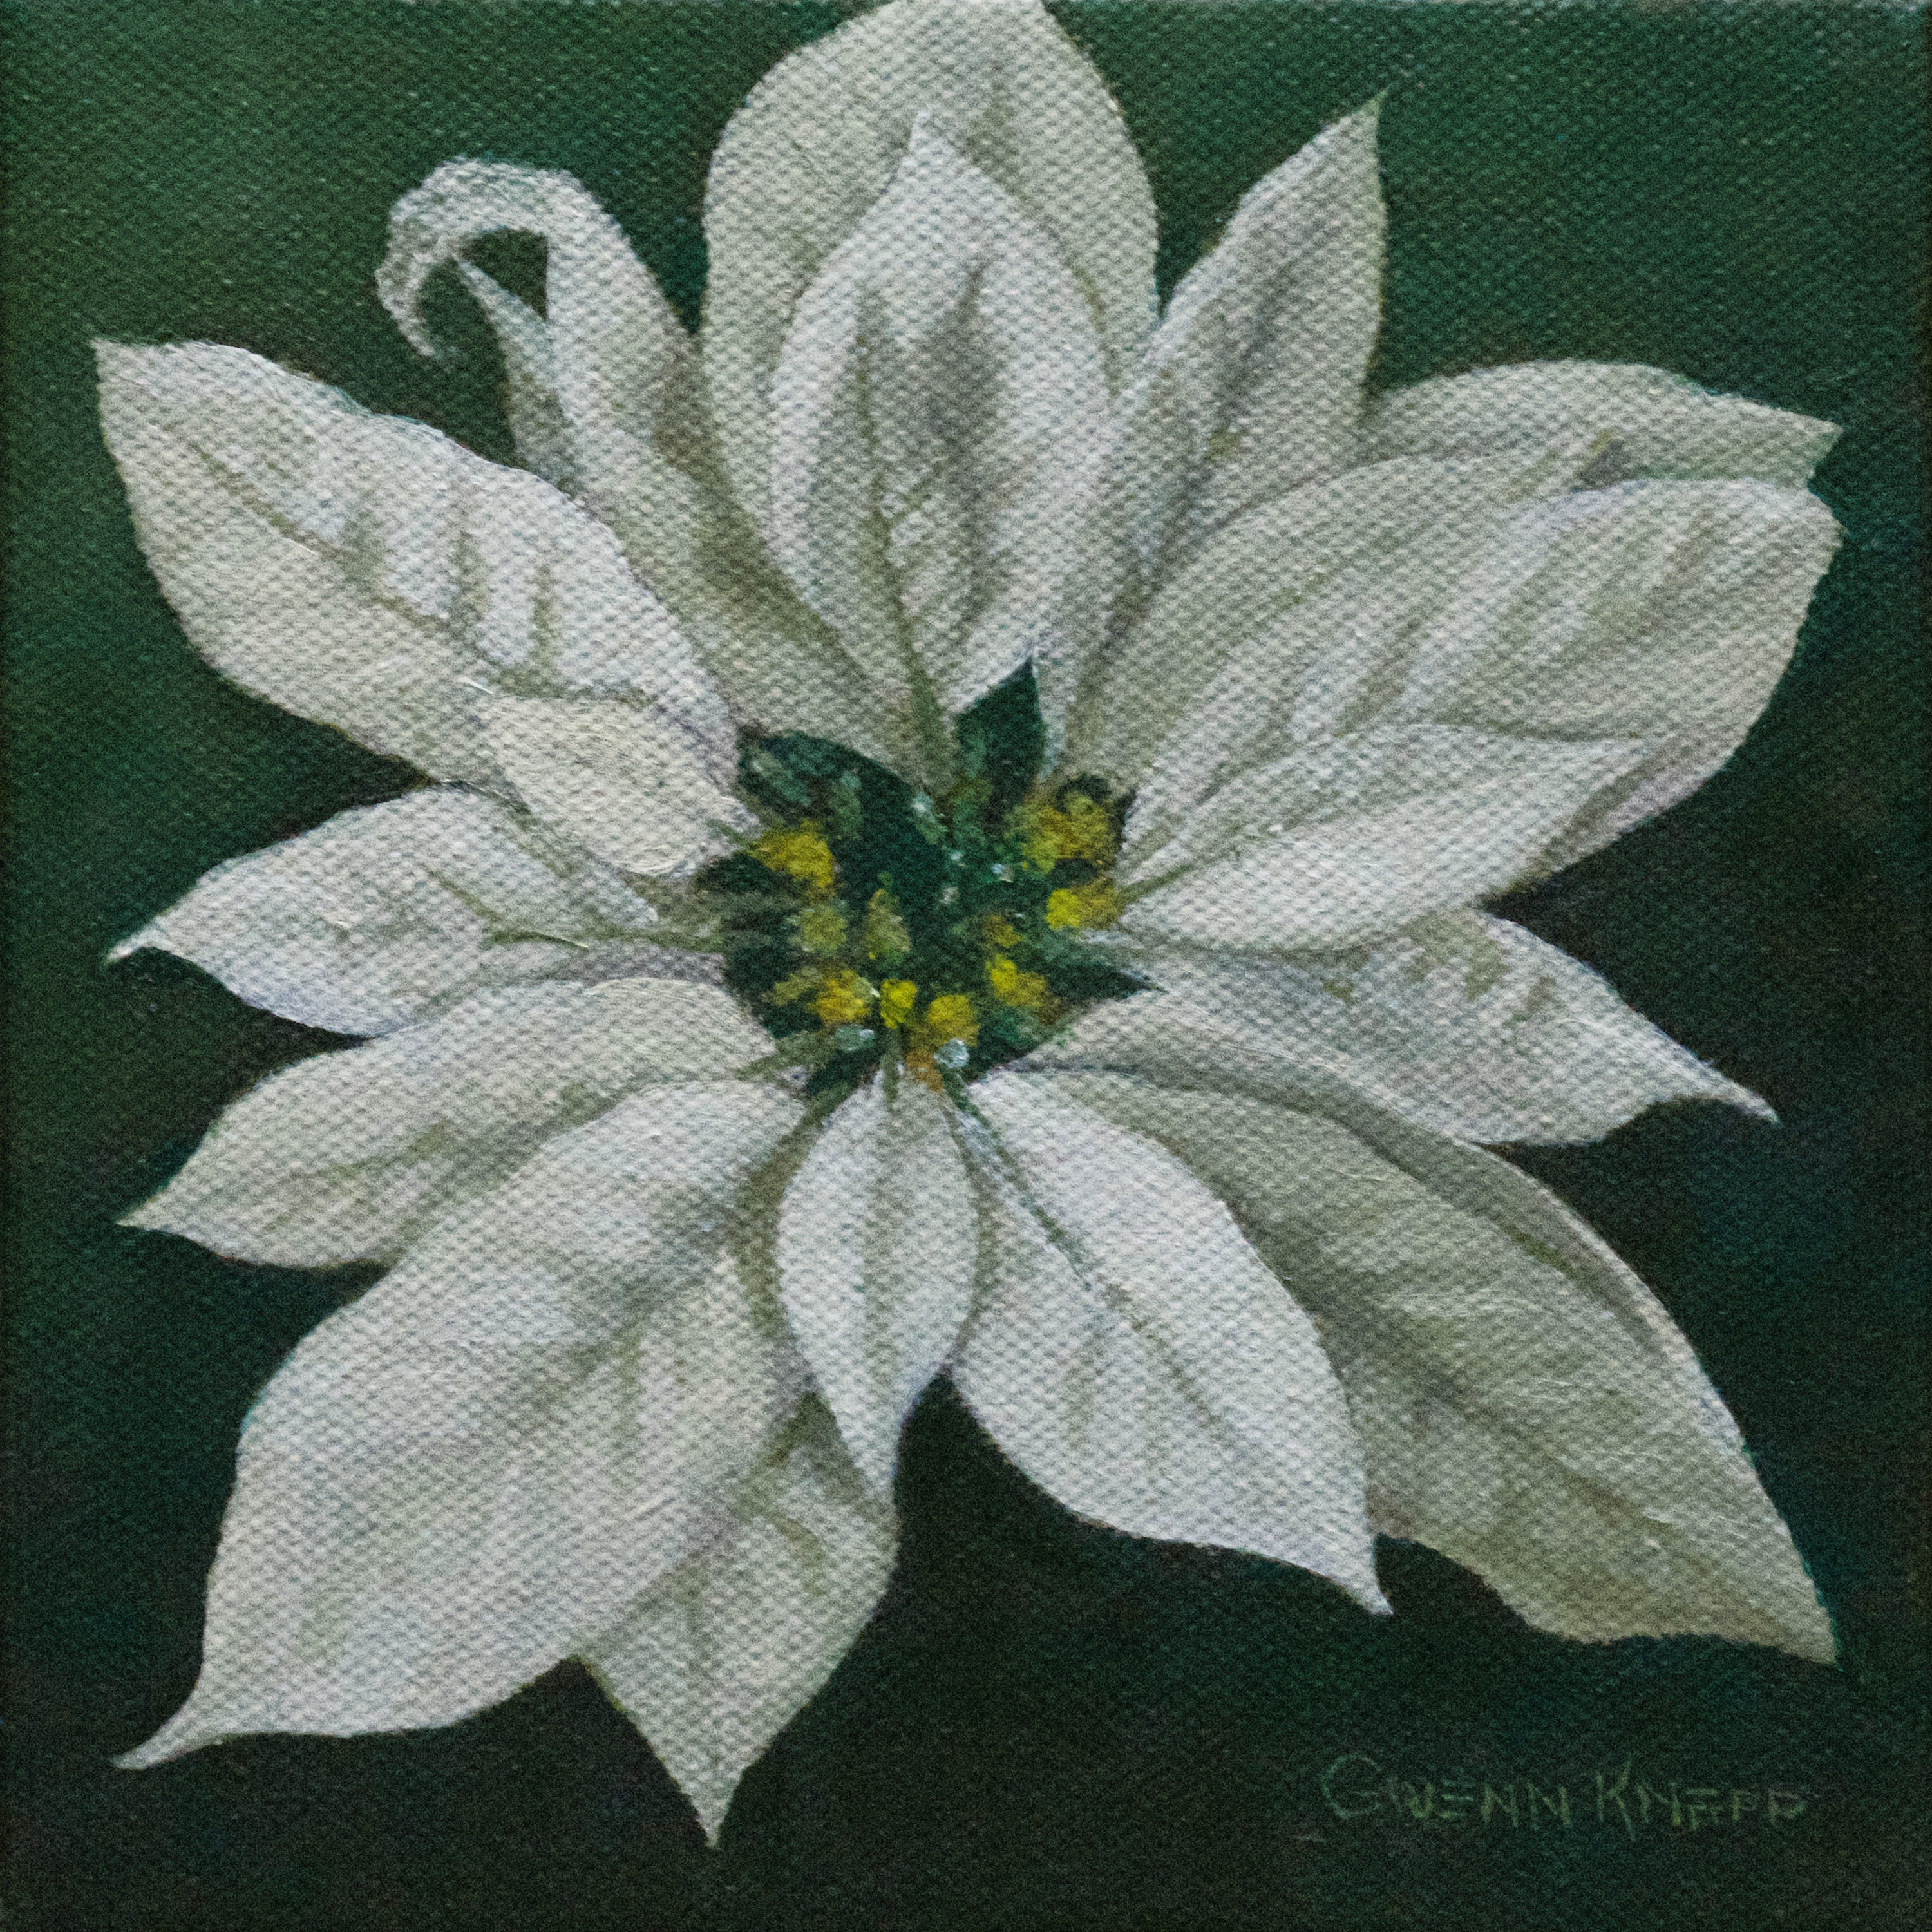 Whitepoinsettia grjph2